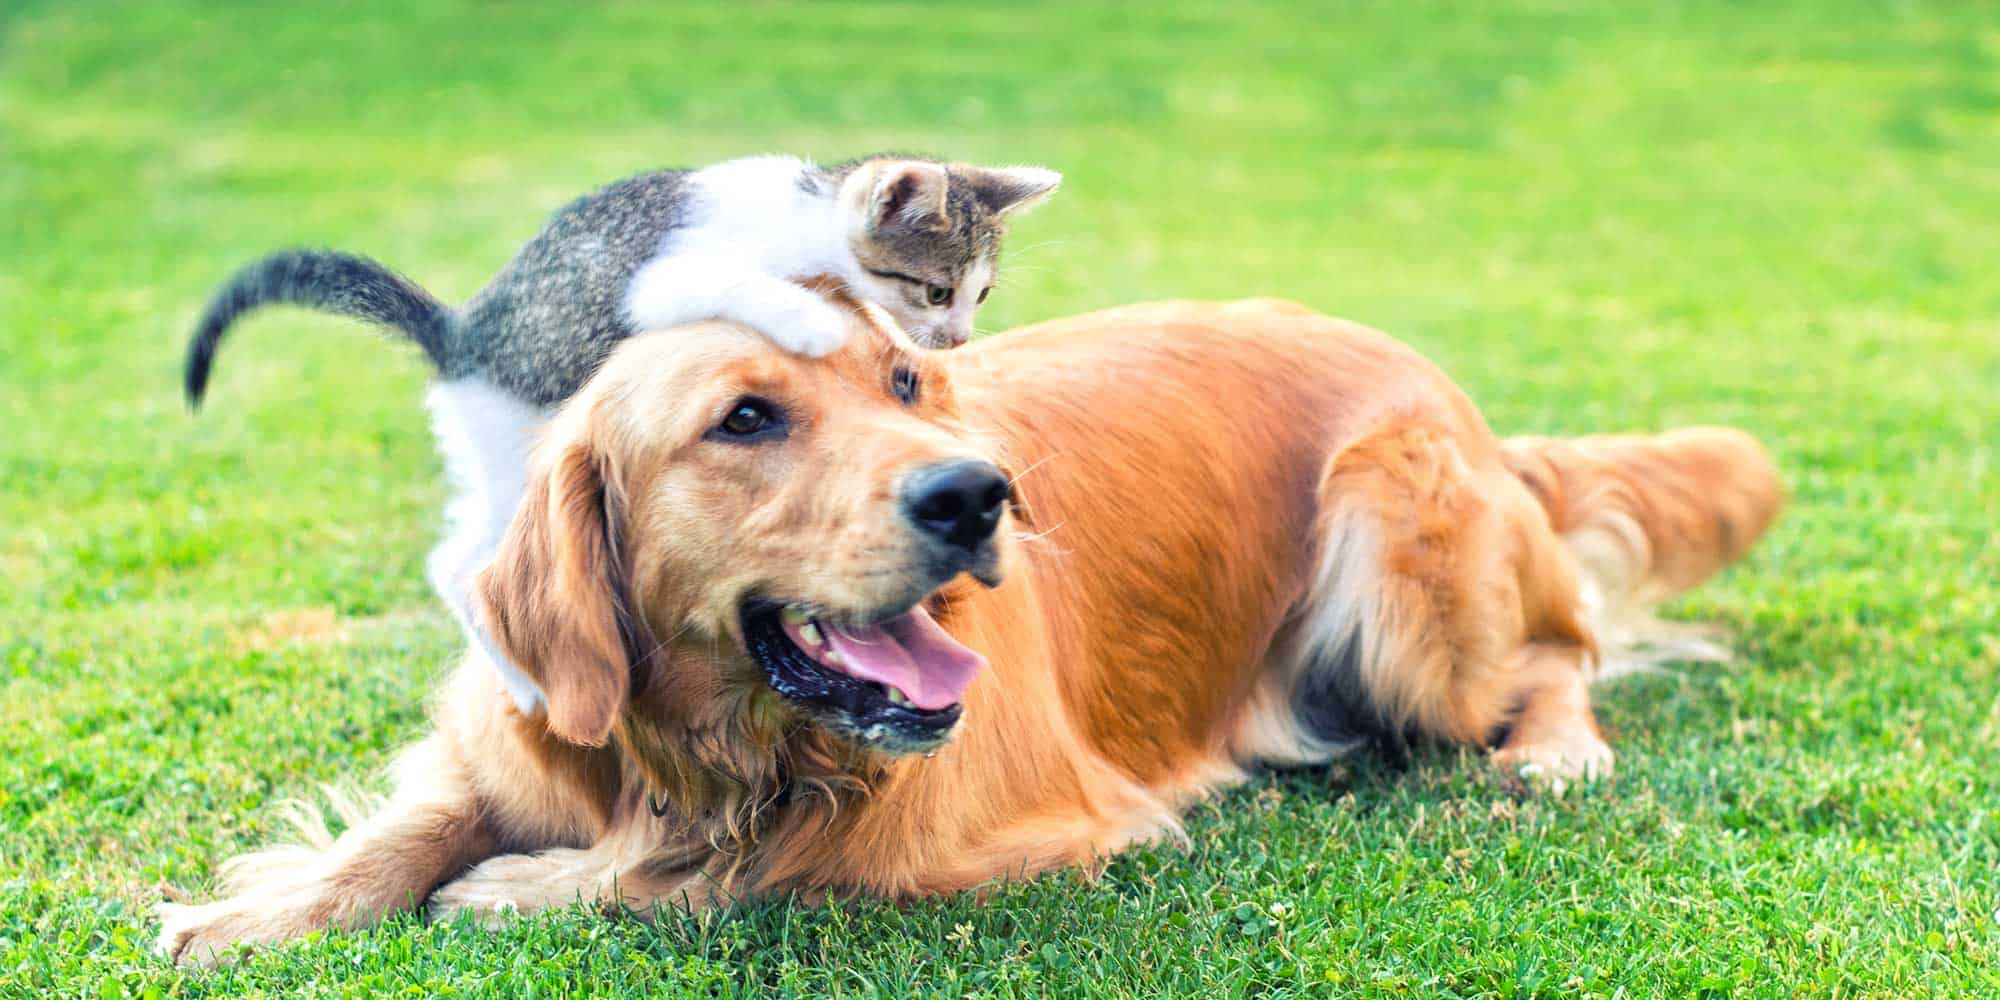 A kitten sitting on a dog's head